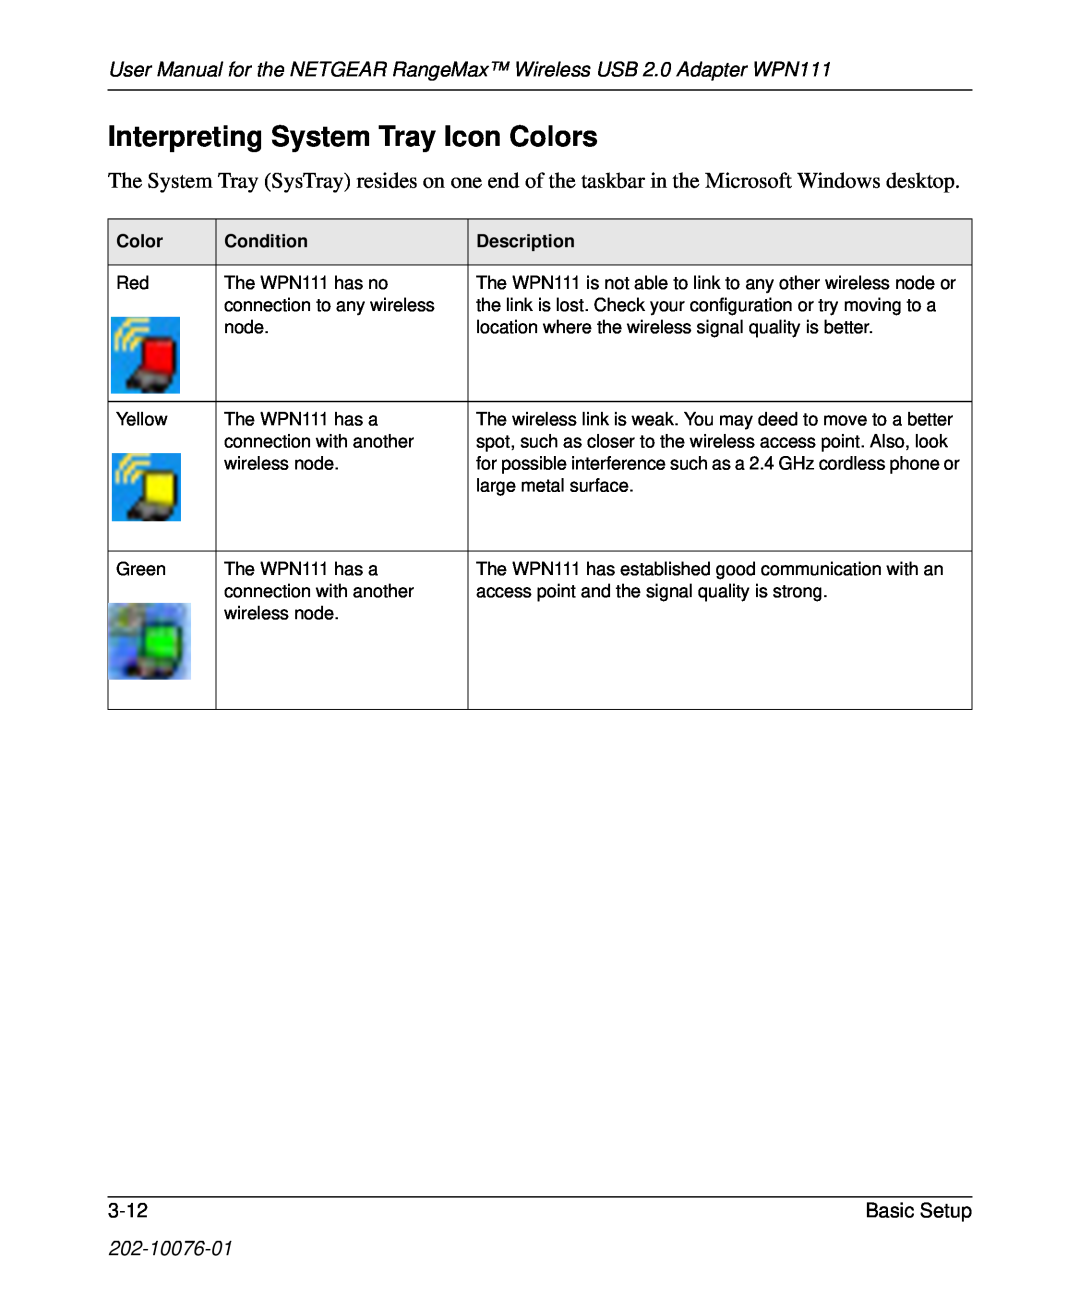 NETGEAR Interpreting System Tray Icon Colors, User Manual for the NETGEAR RangeMax Wireless USB 2.0 Adapter WPN111 